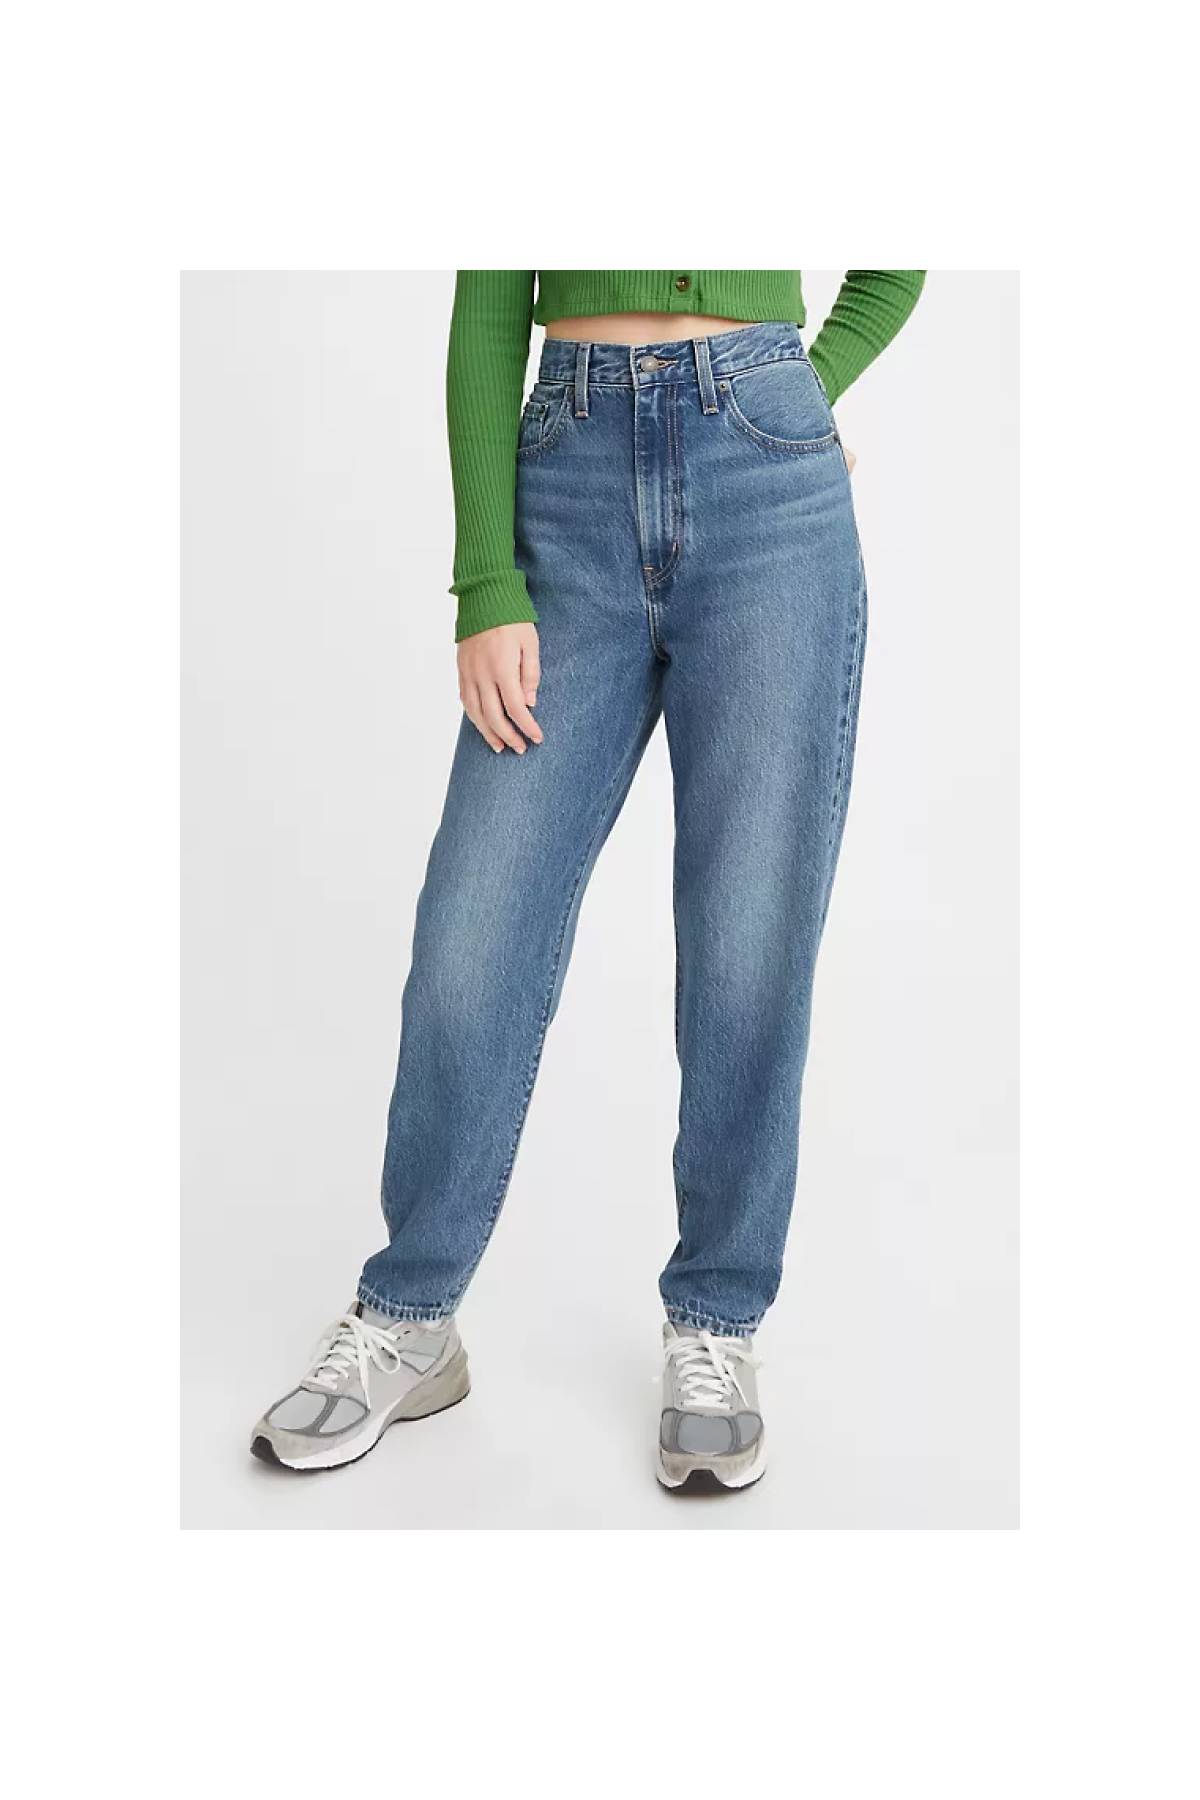 model wearing high loose taper jeans